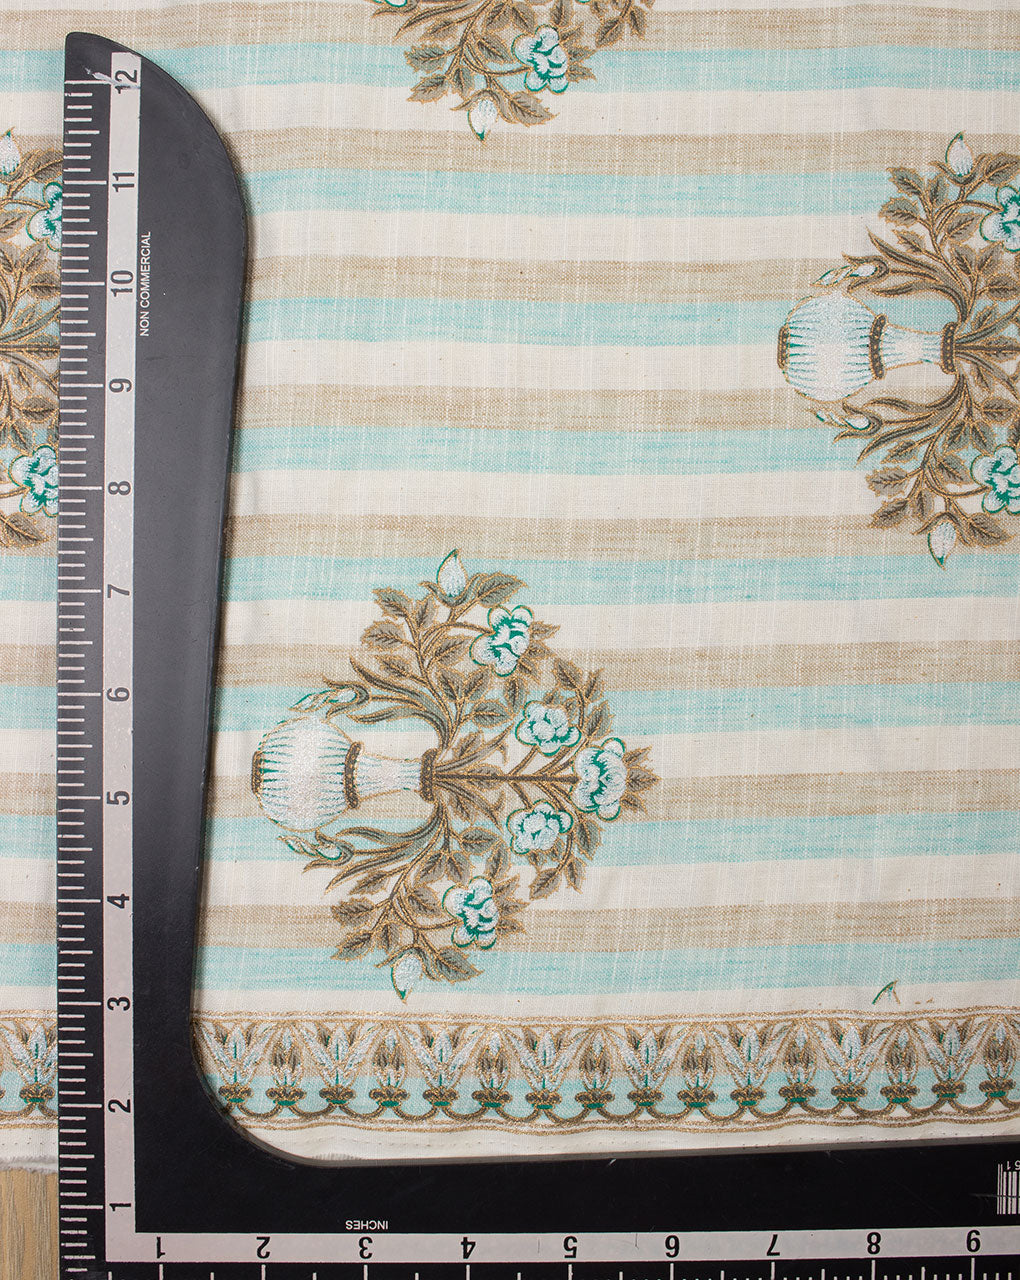 Woven Loom Textured Foil Screen Print Cotton Fabric - Fabriclore.com